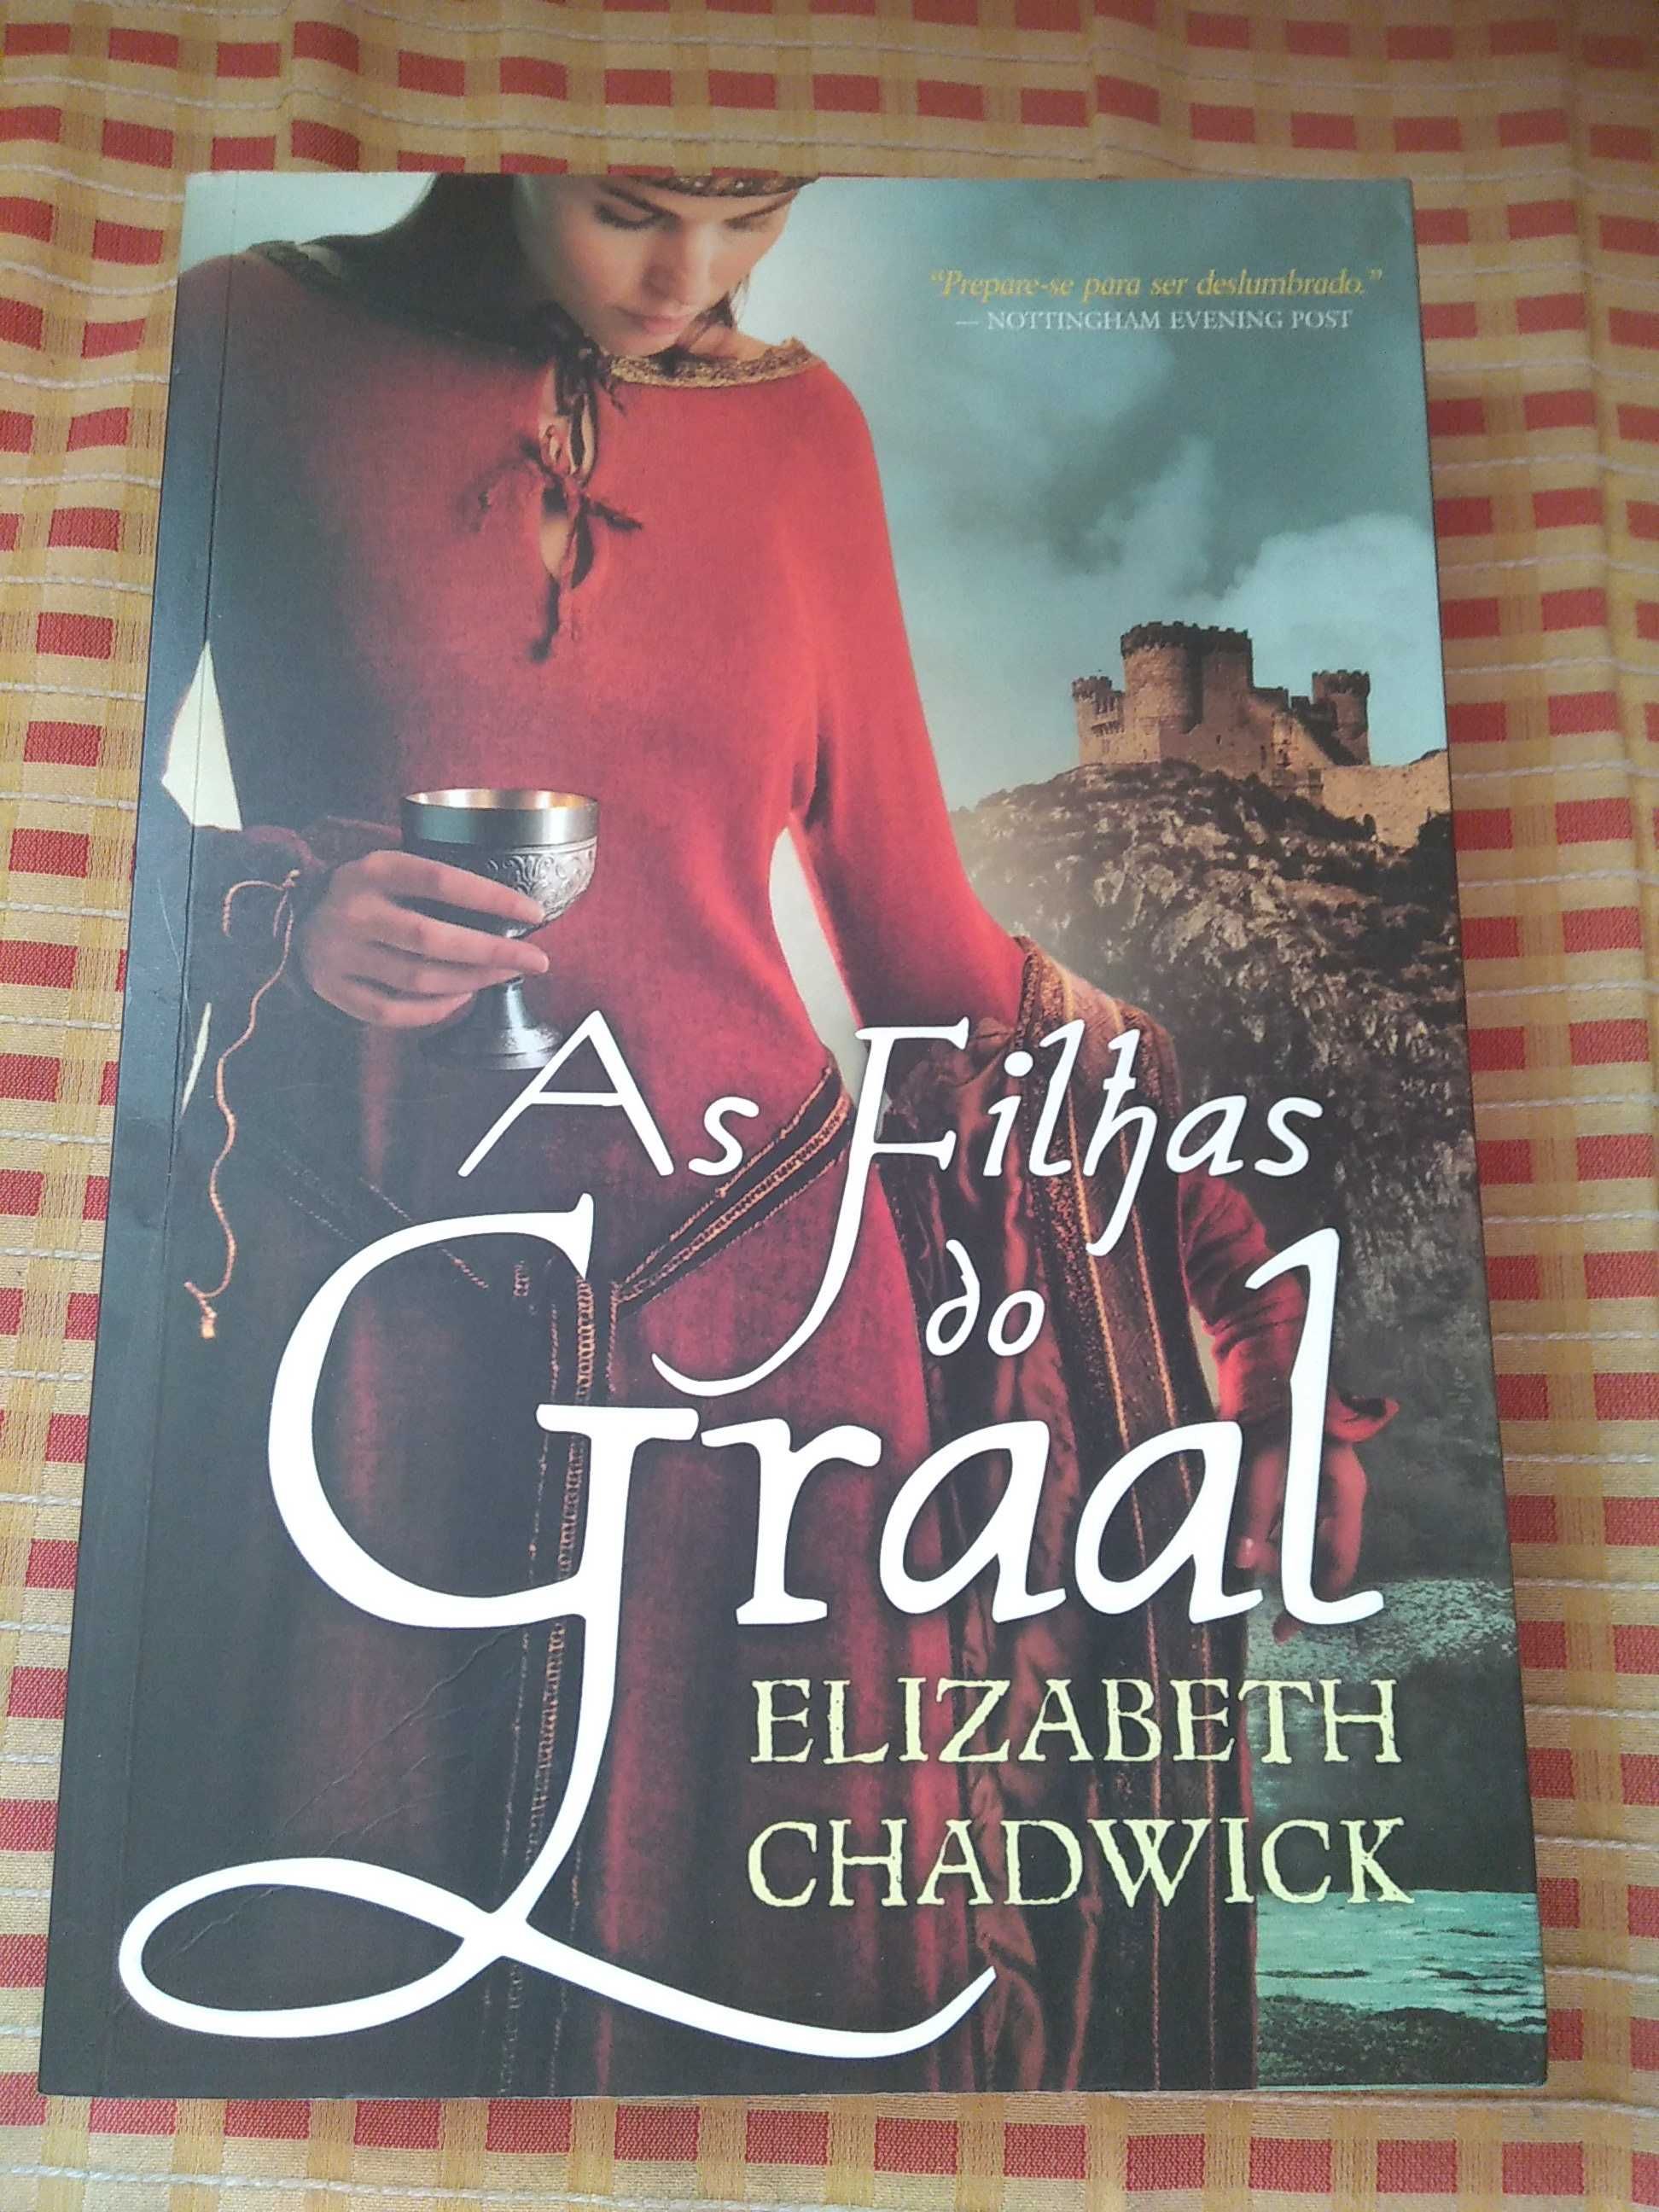 Elisabeth Chadwick - As filhas de Graal